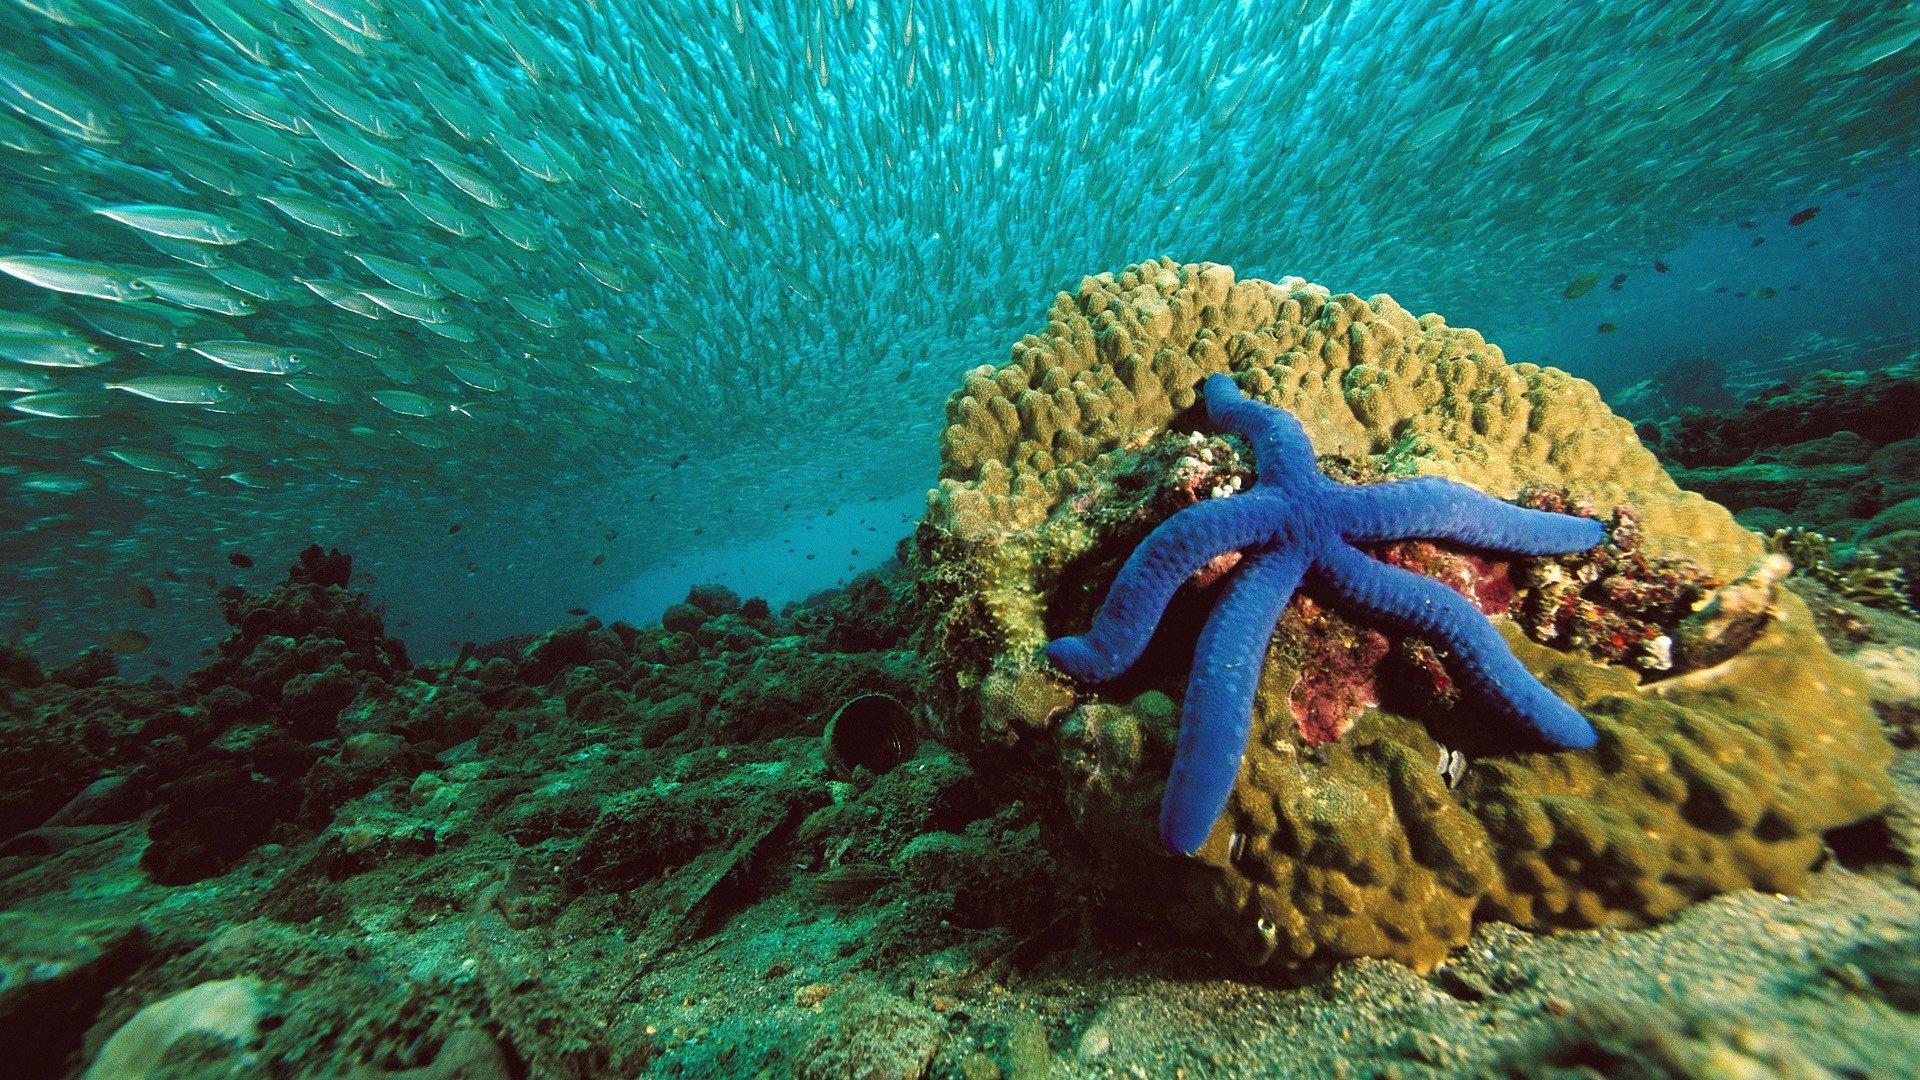 General 1920x1080 nature starfish sea water underwater fish coral